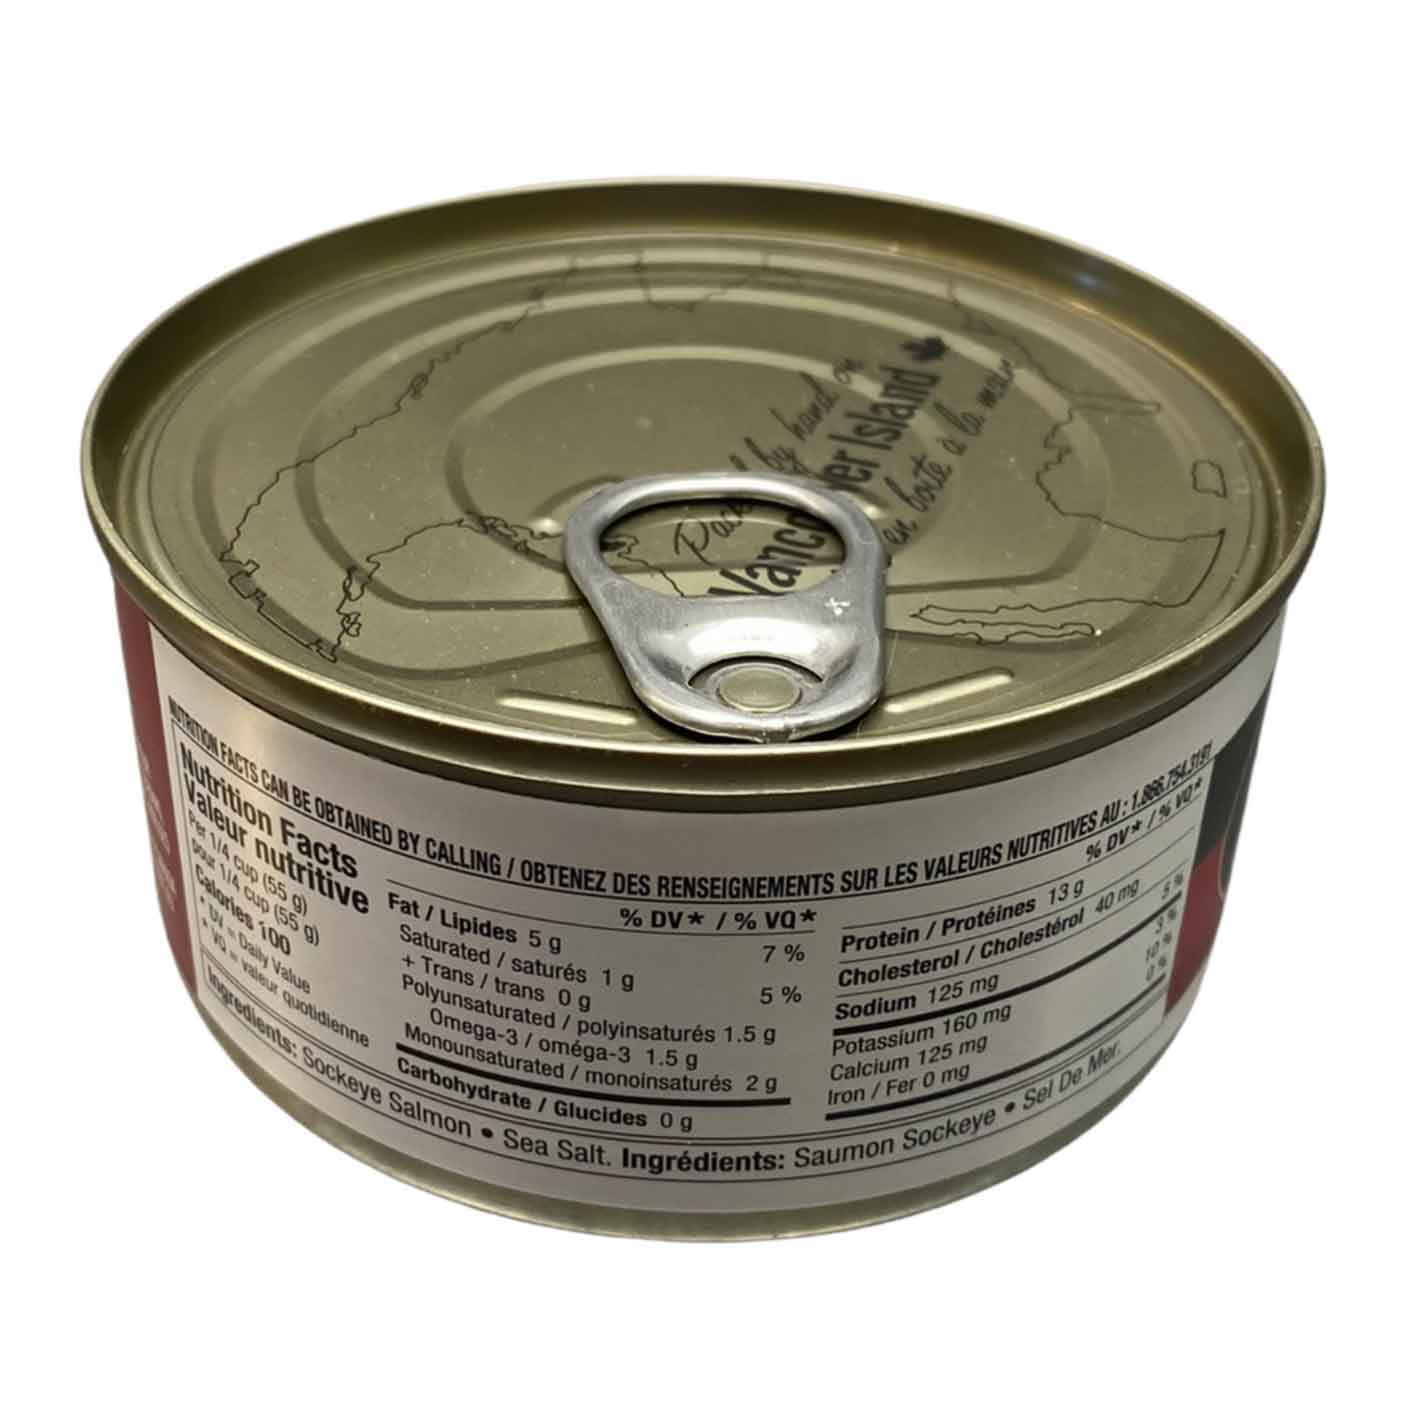 Canned Sockeye Salmon Raincoast